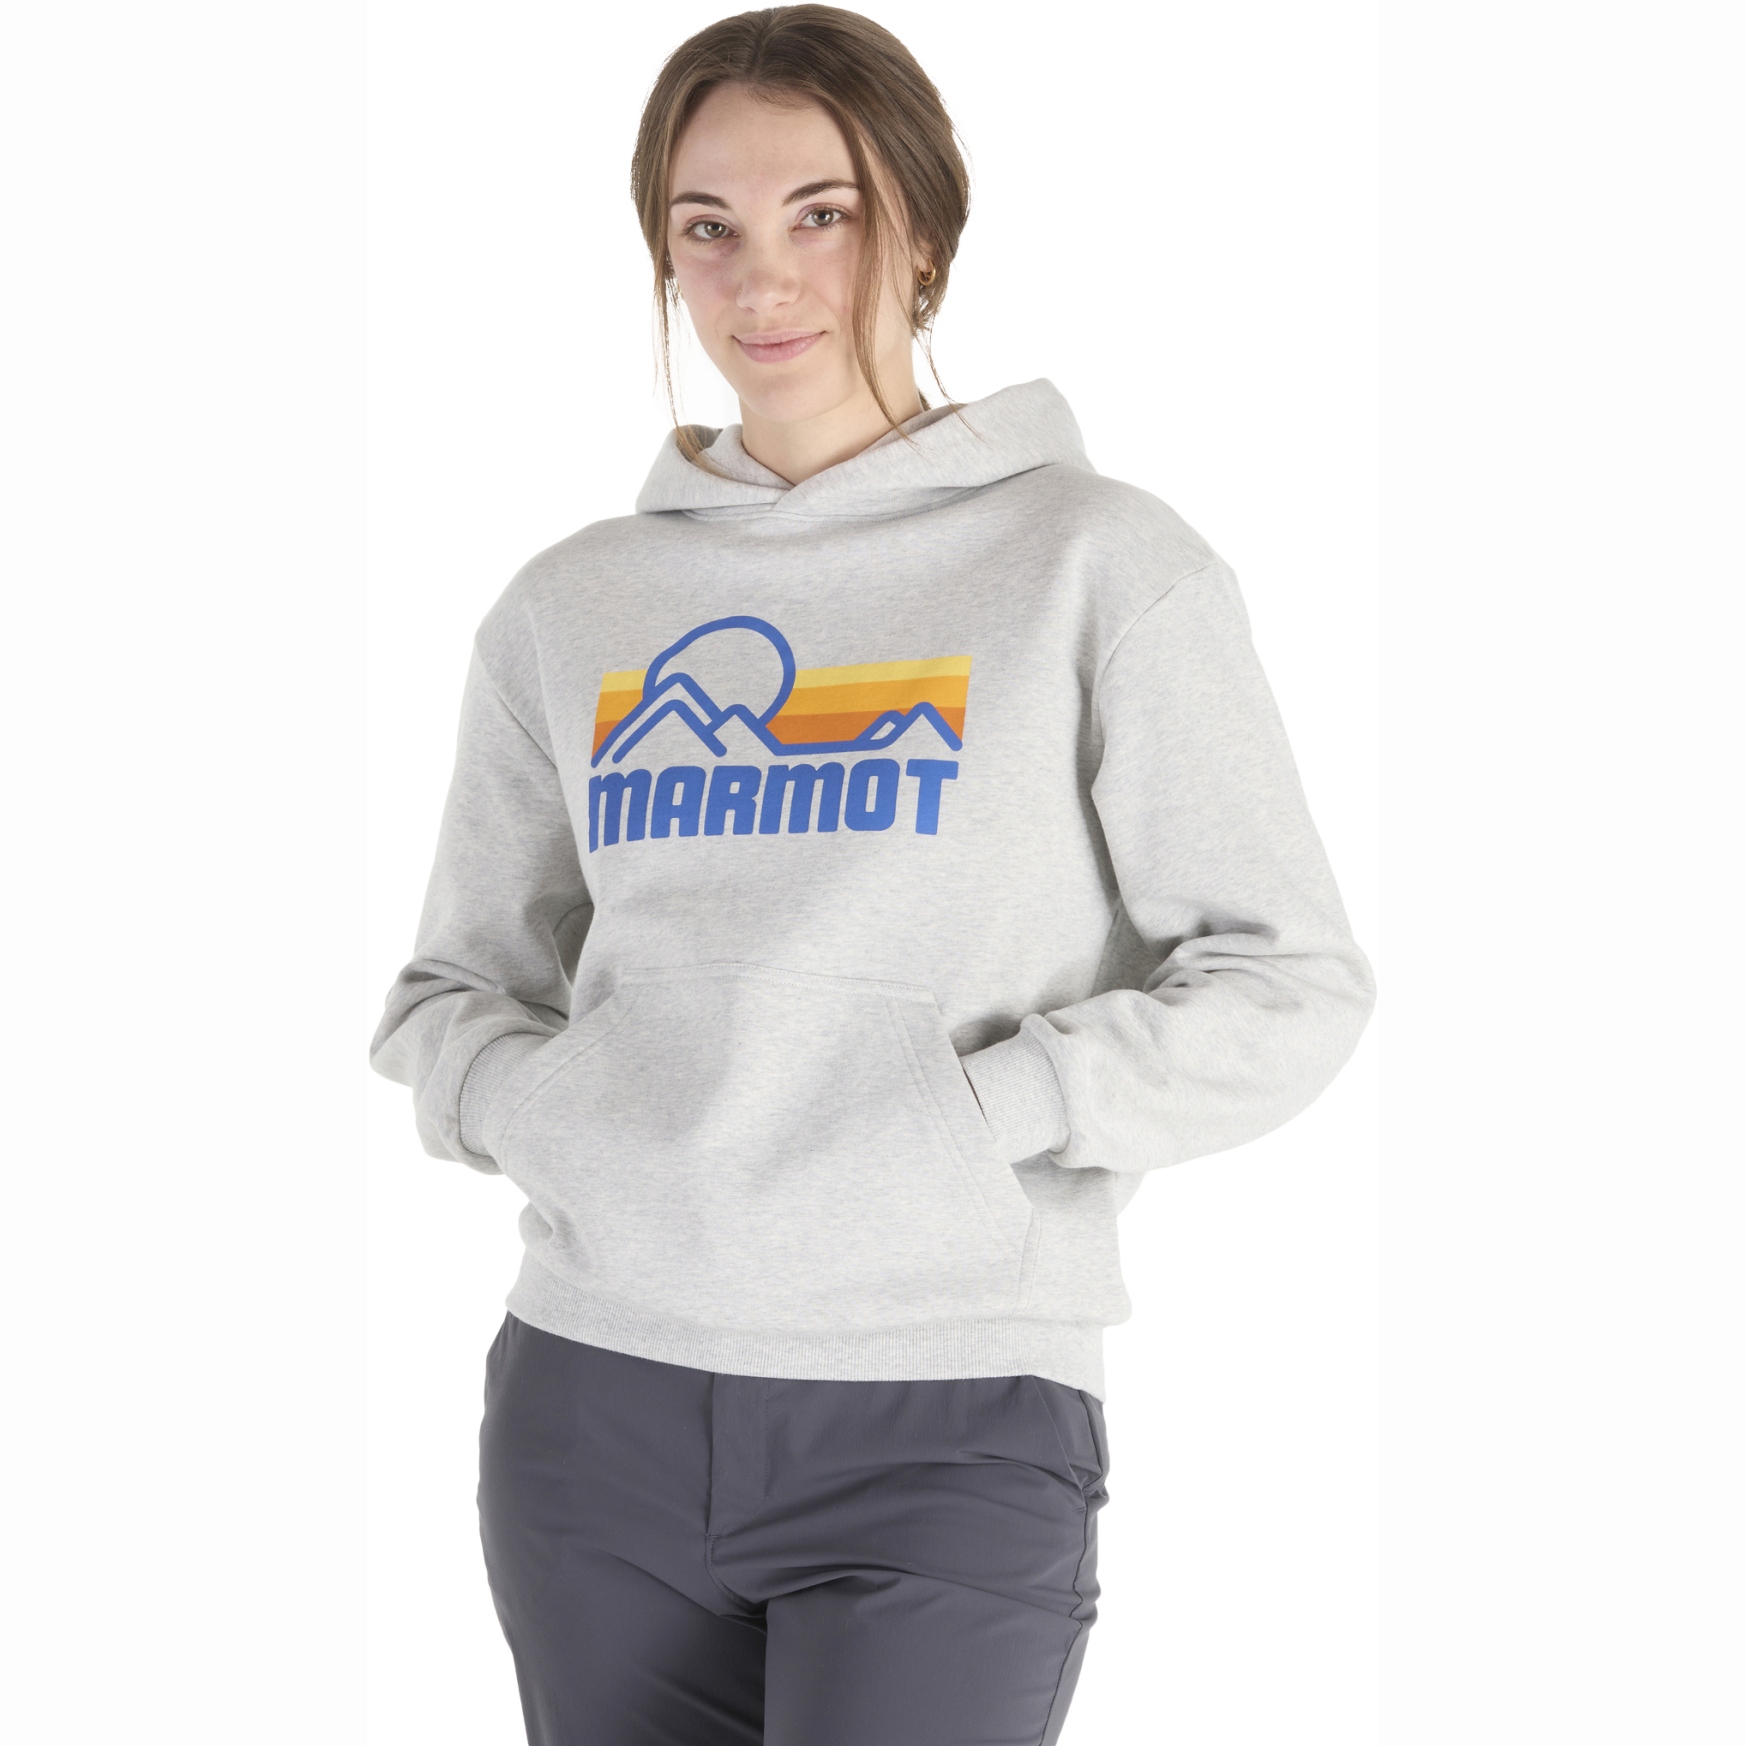 Productfoto van Marmot Coastal Hoodie Dames - light grey heather